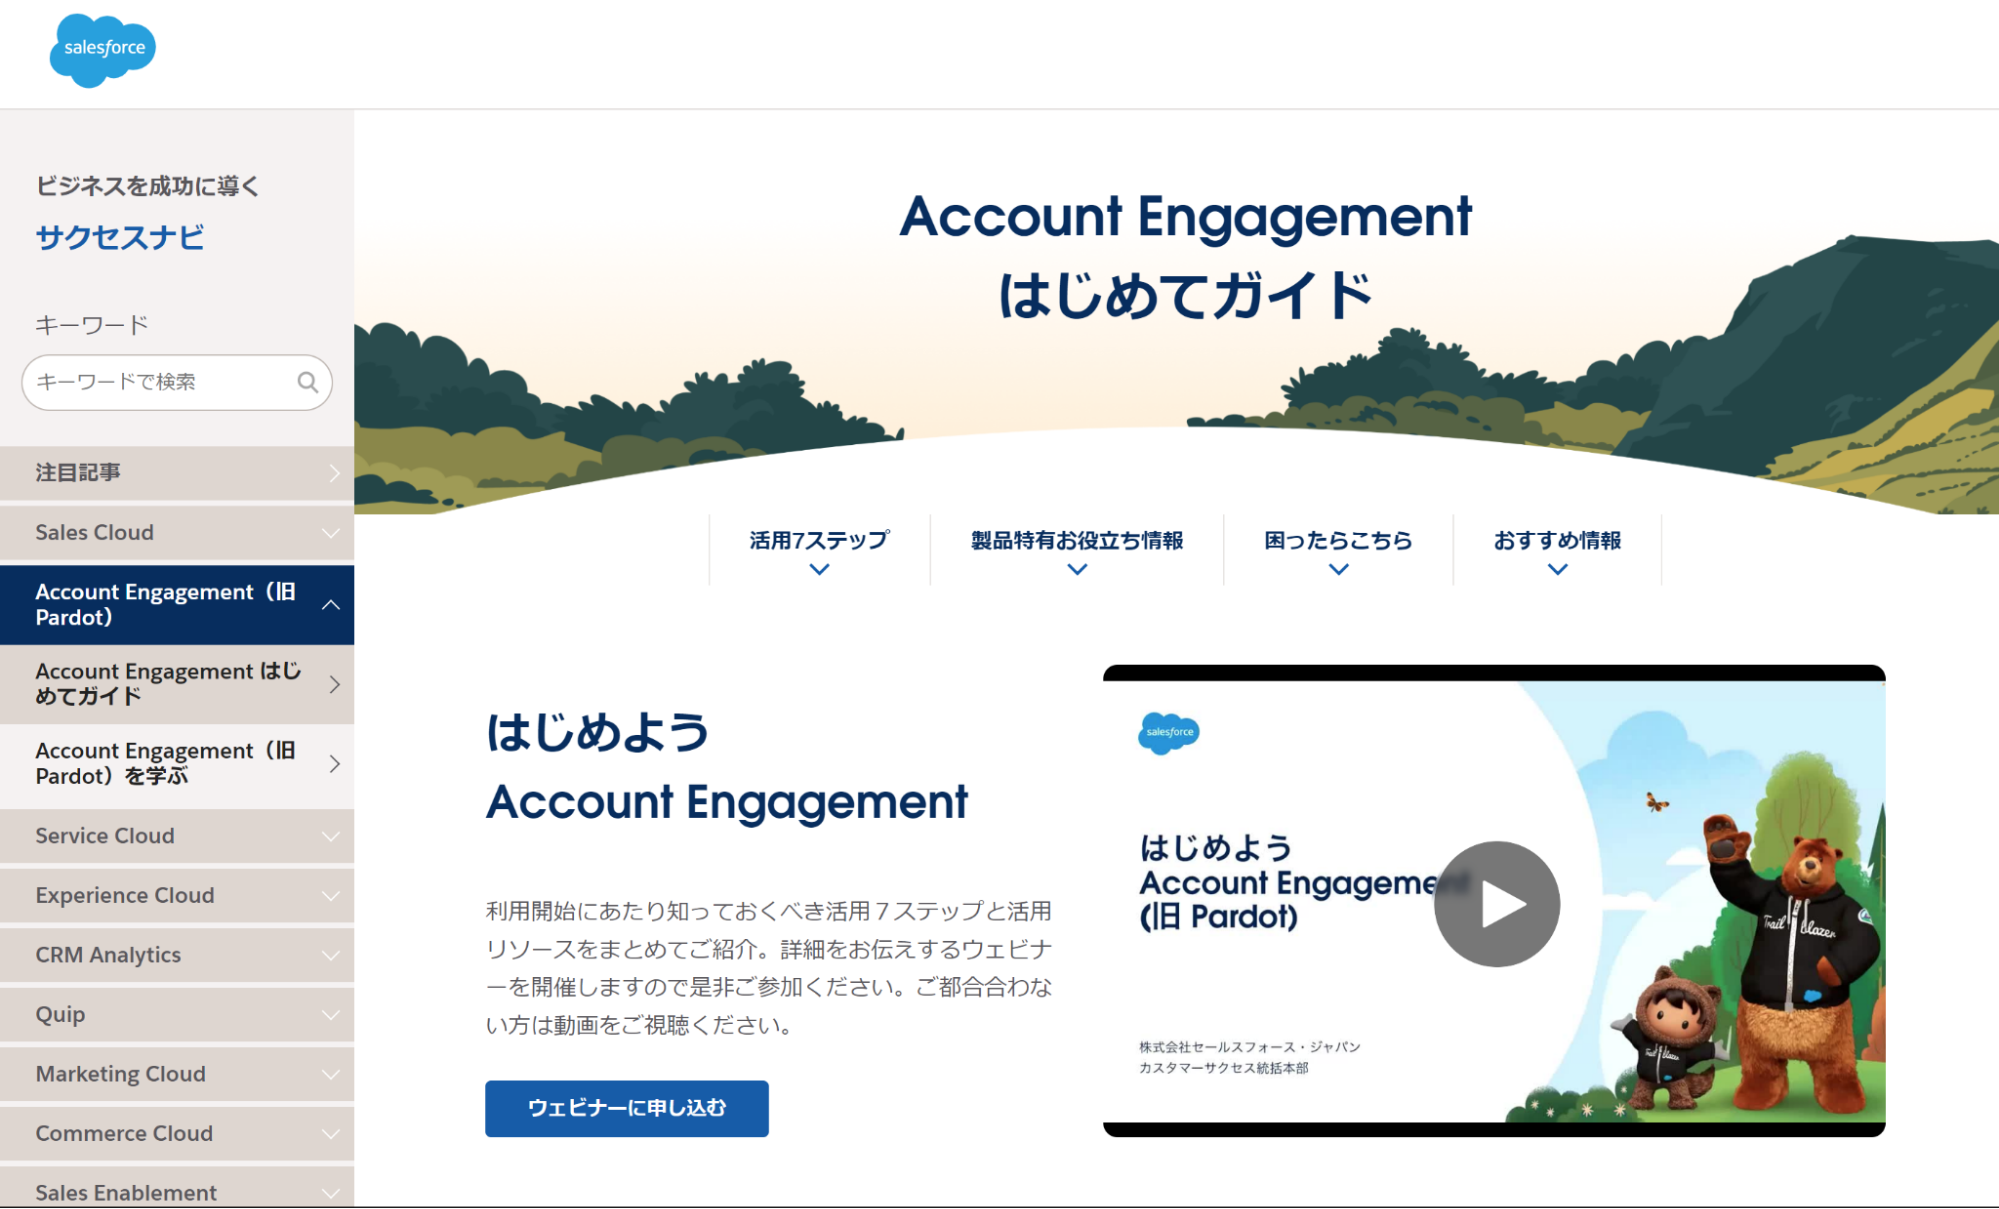 Account Engagement